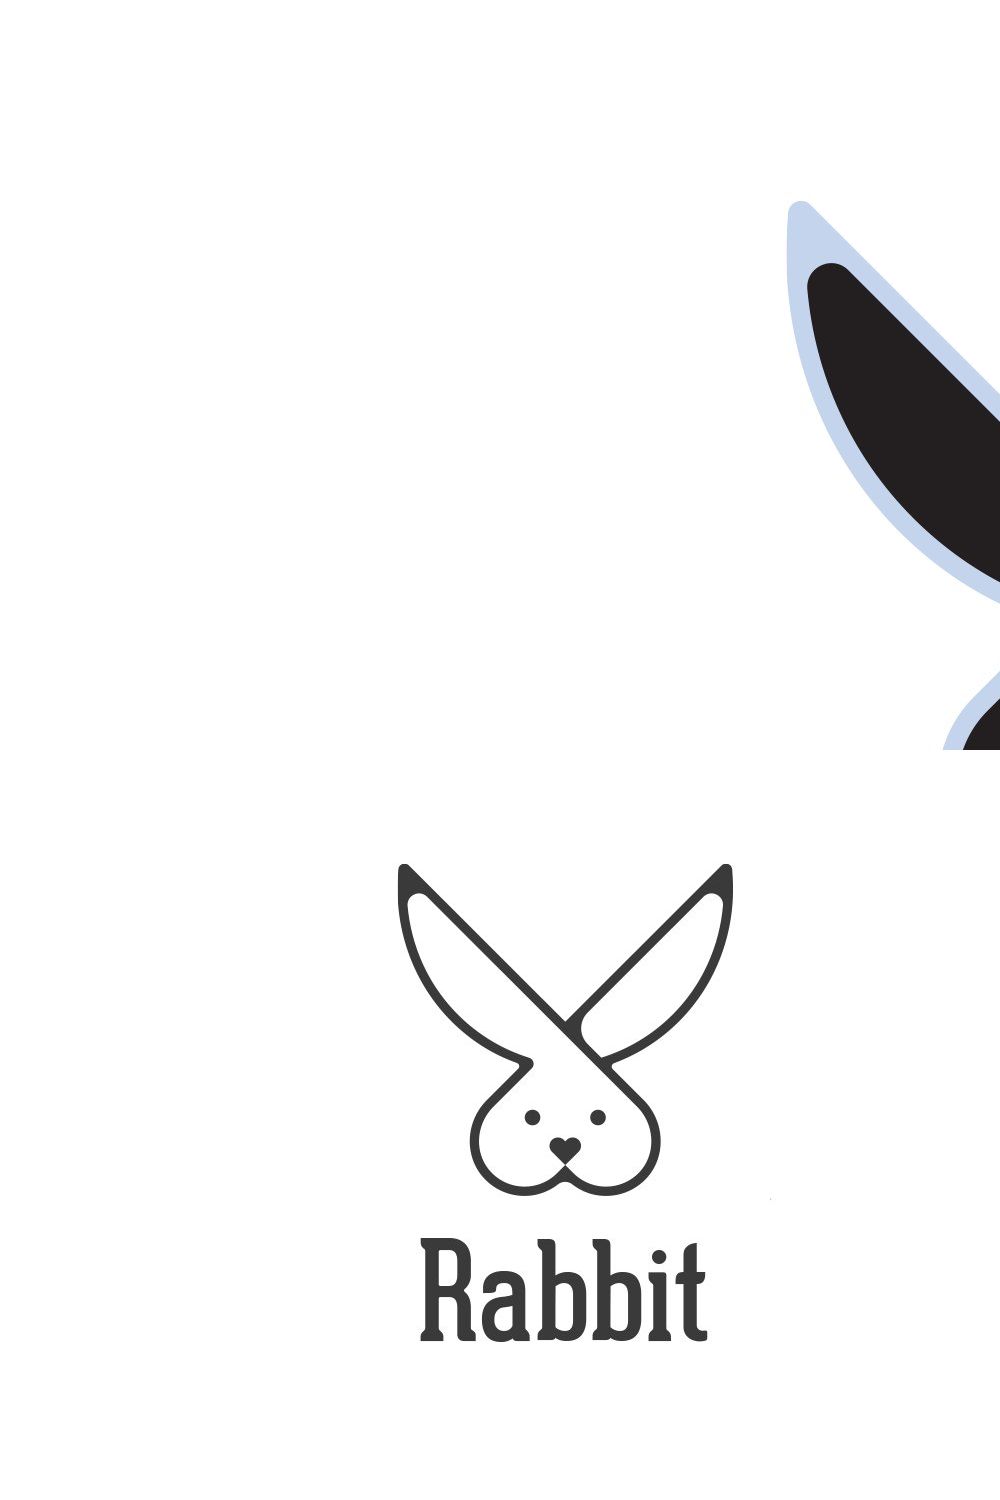 Rabbit logo pinterest preview image.